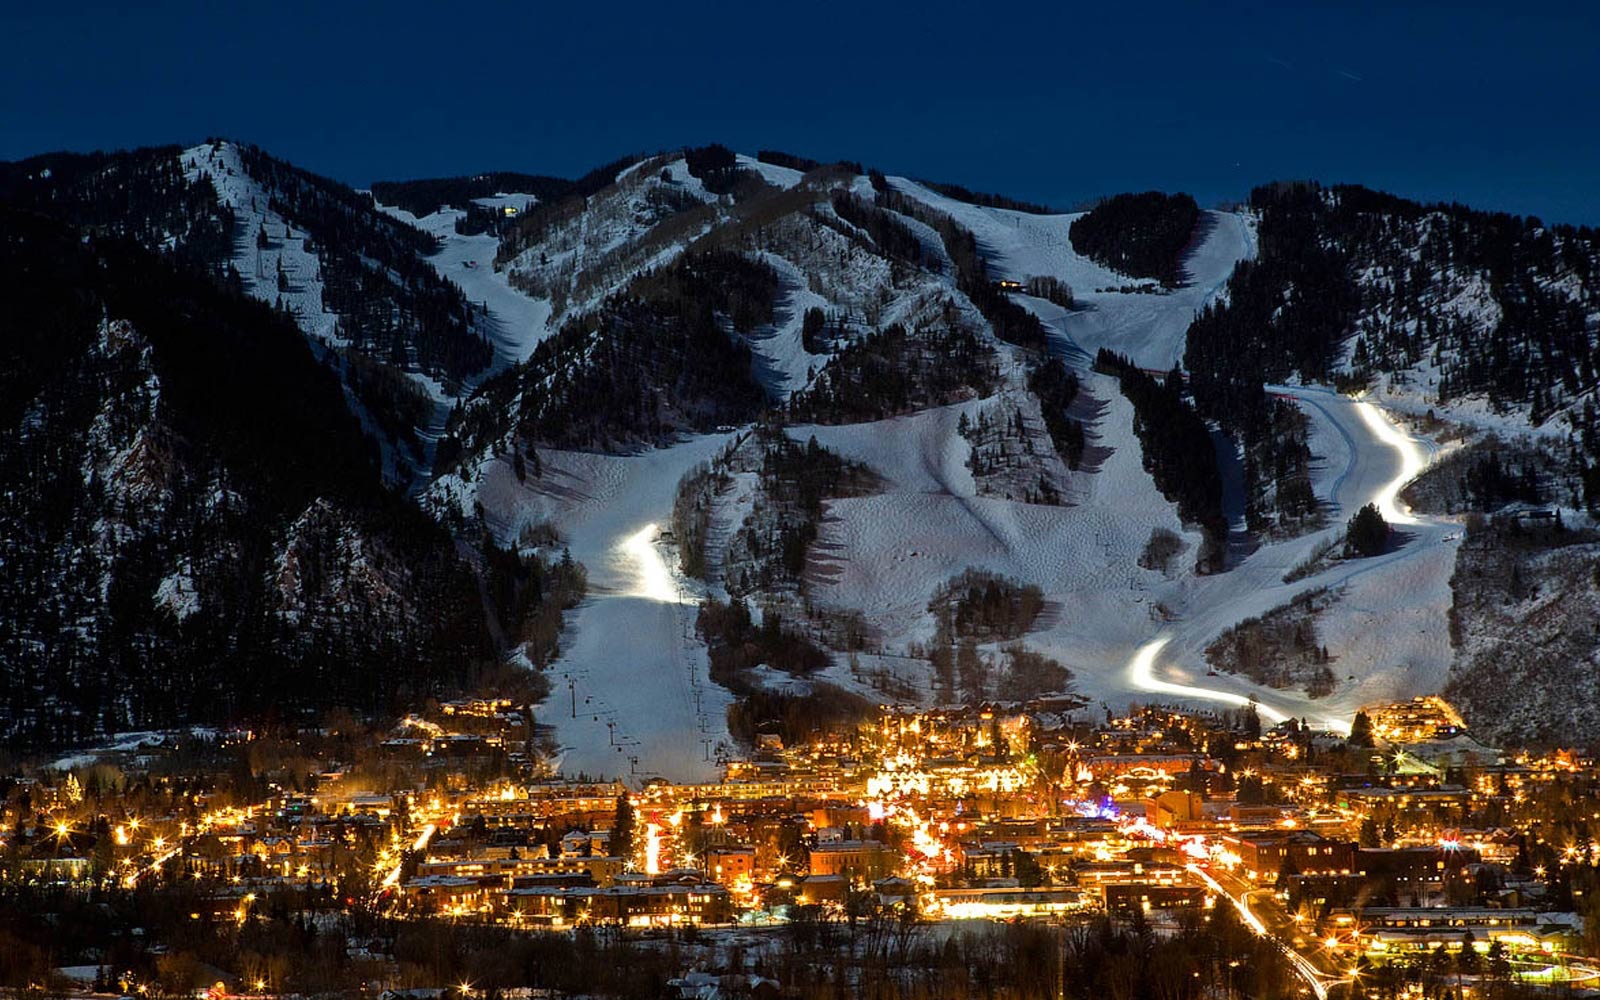 Aspen, CO Winter Night & City Lights